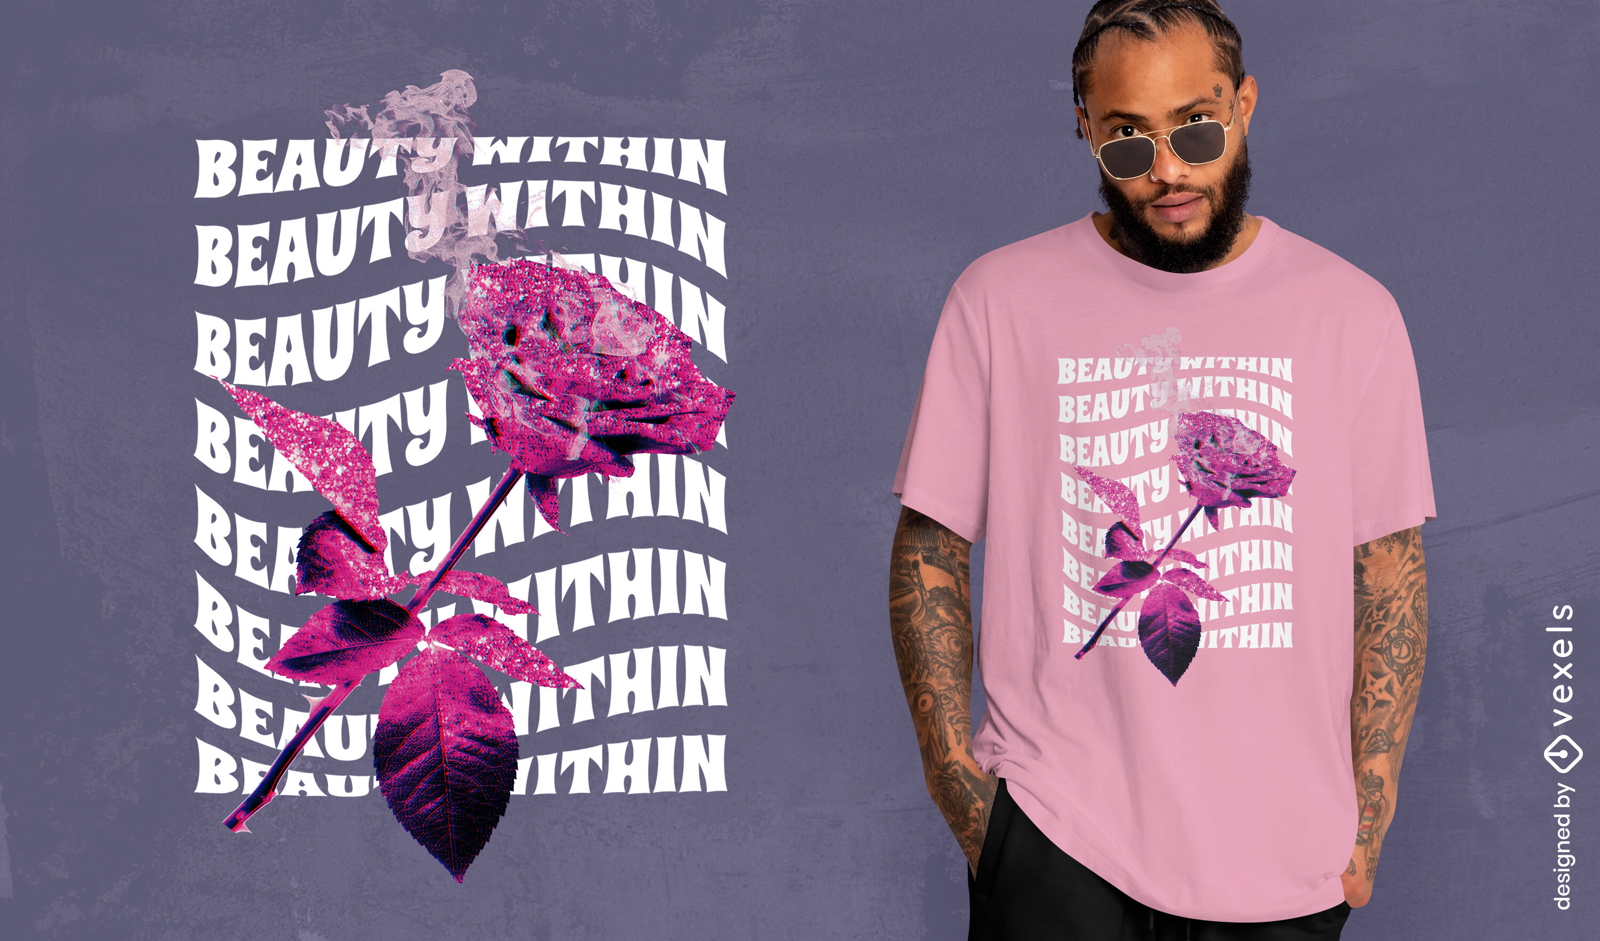 https://images.vexels.com/media/users/3/326991/raw/282c3857084fa396c3b80c012bf88353-glitter-pink-rose-on-fire-t-shirt-psd.jpg